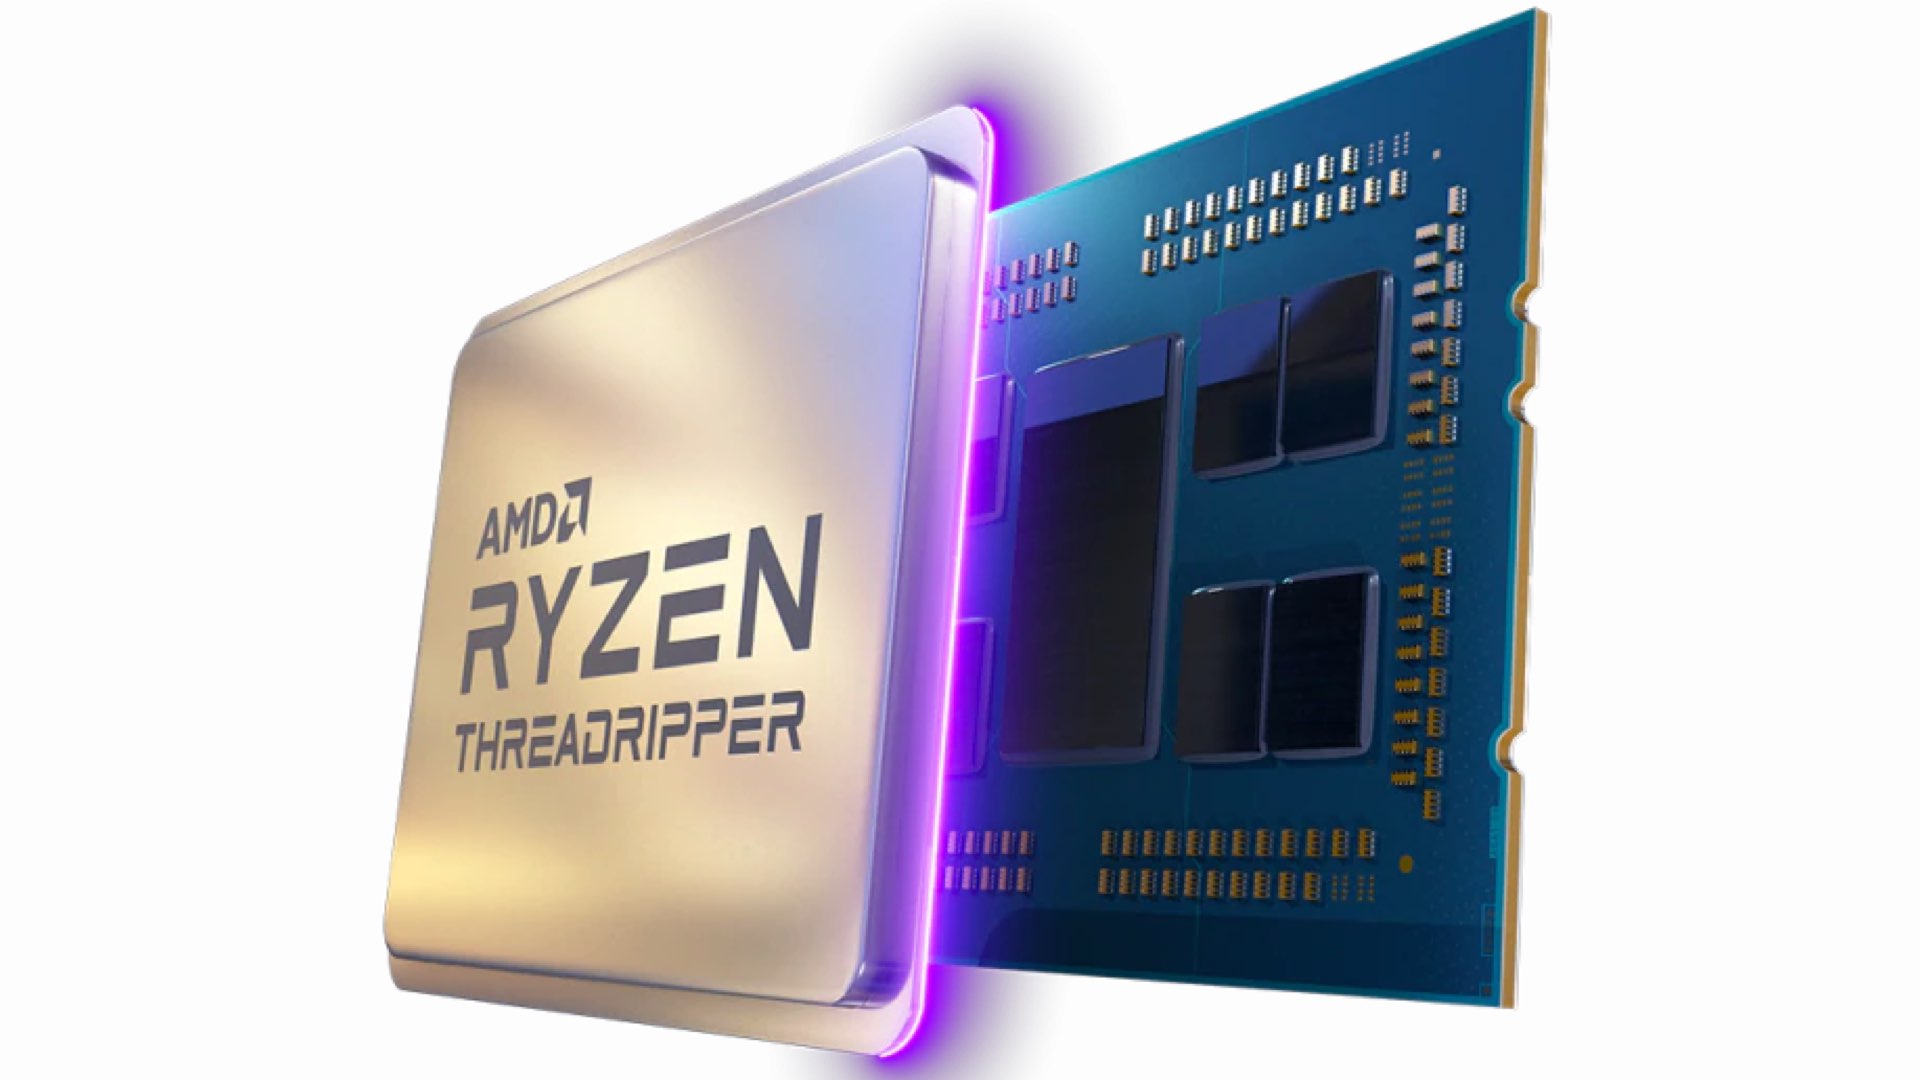 8. AMD Ryzen Threadripper 3990X